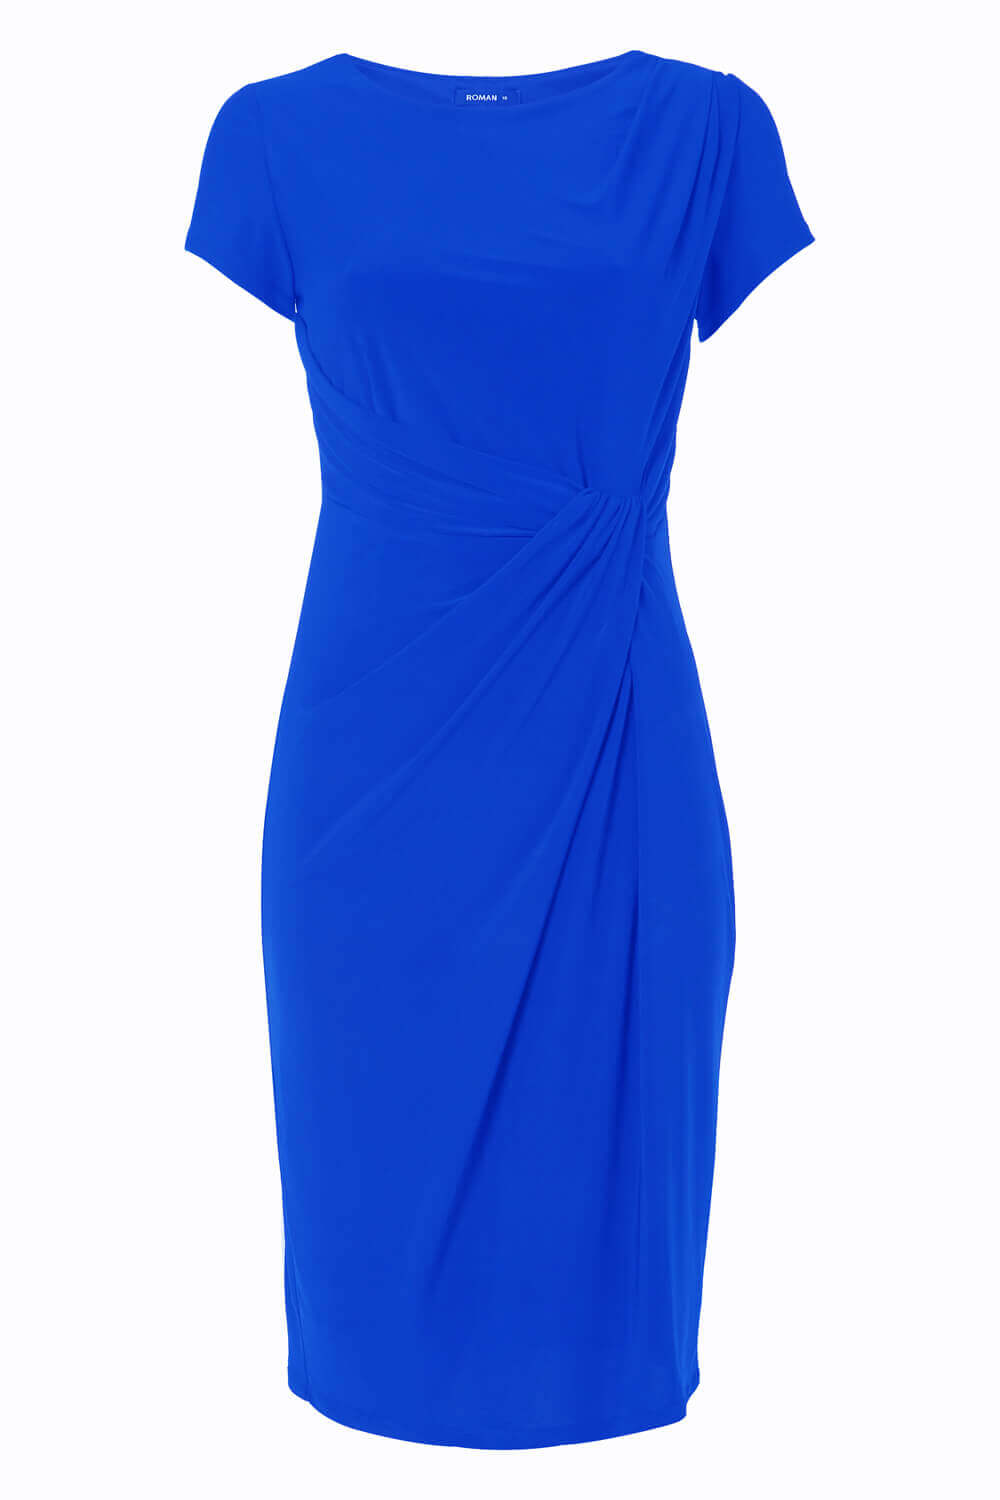 Short Sleeve Twist Waist Dress in Royal Blue - Roman Originals UK